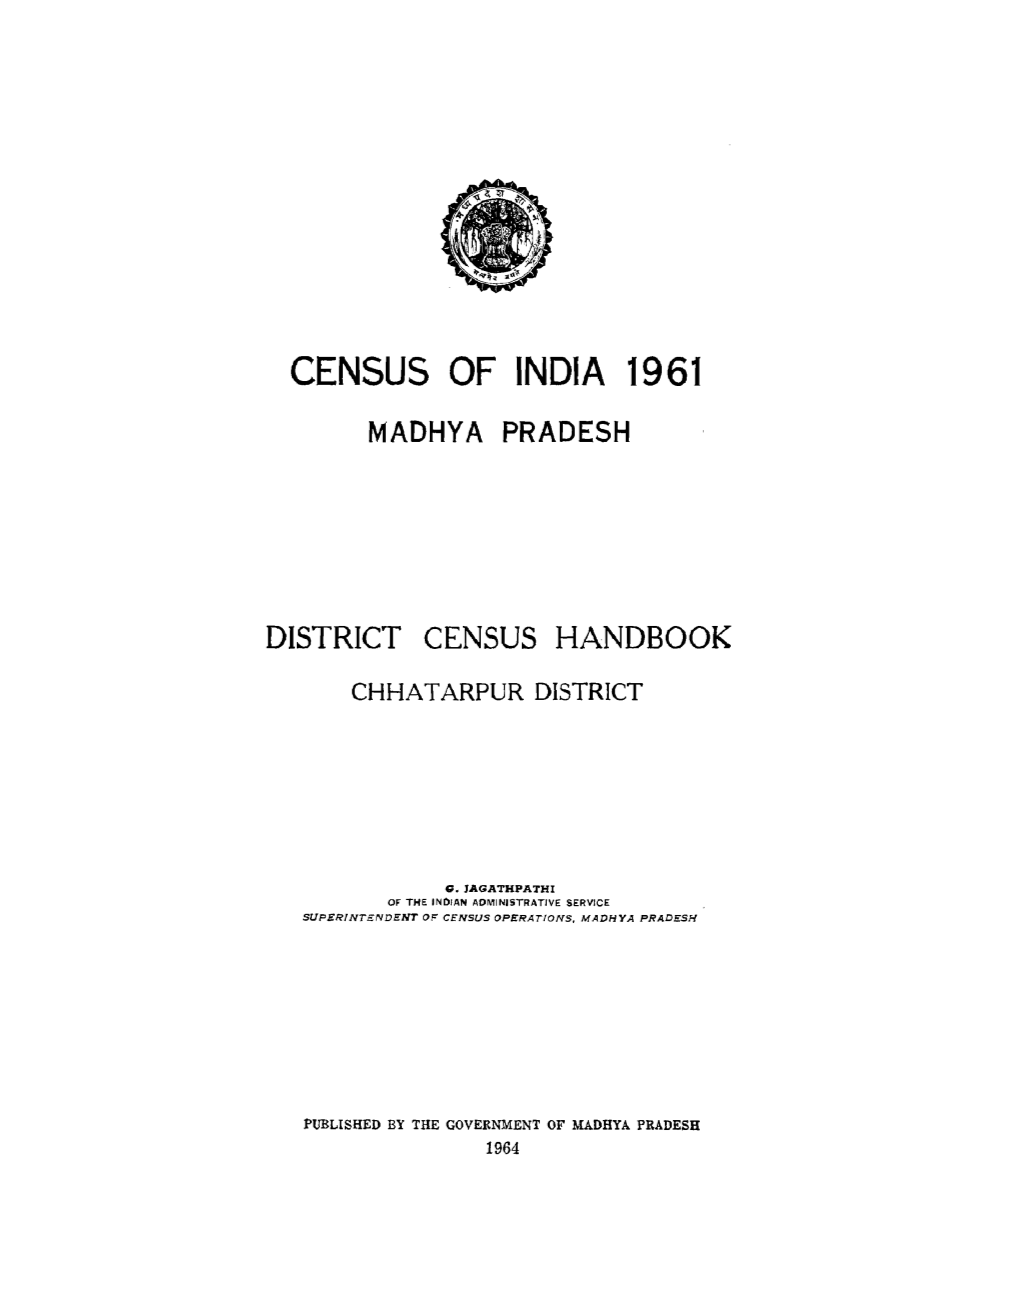 District Census Handbook, Chhatarpur